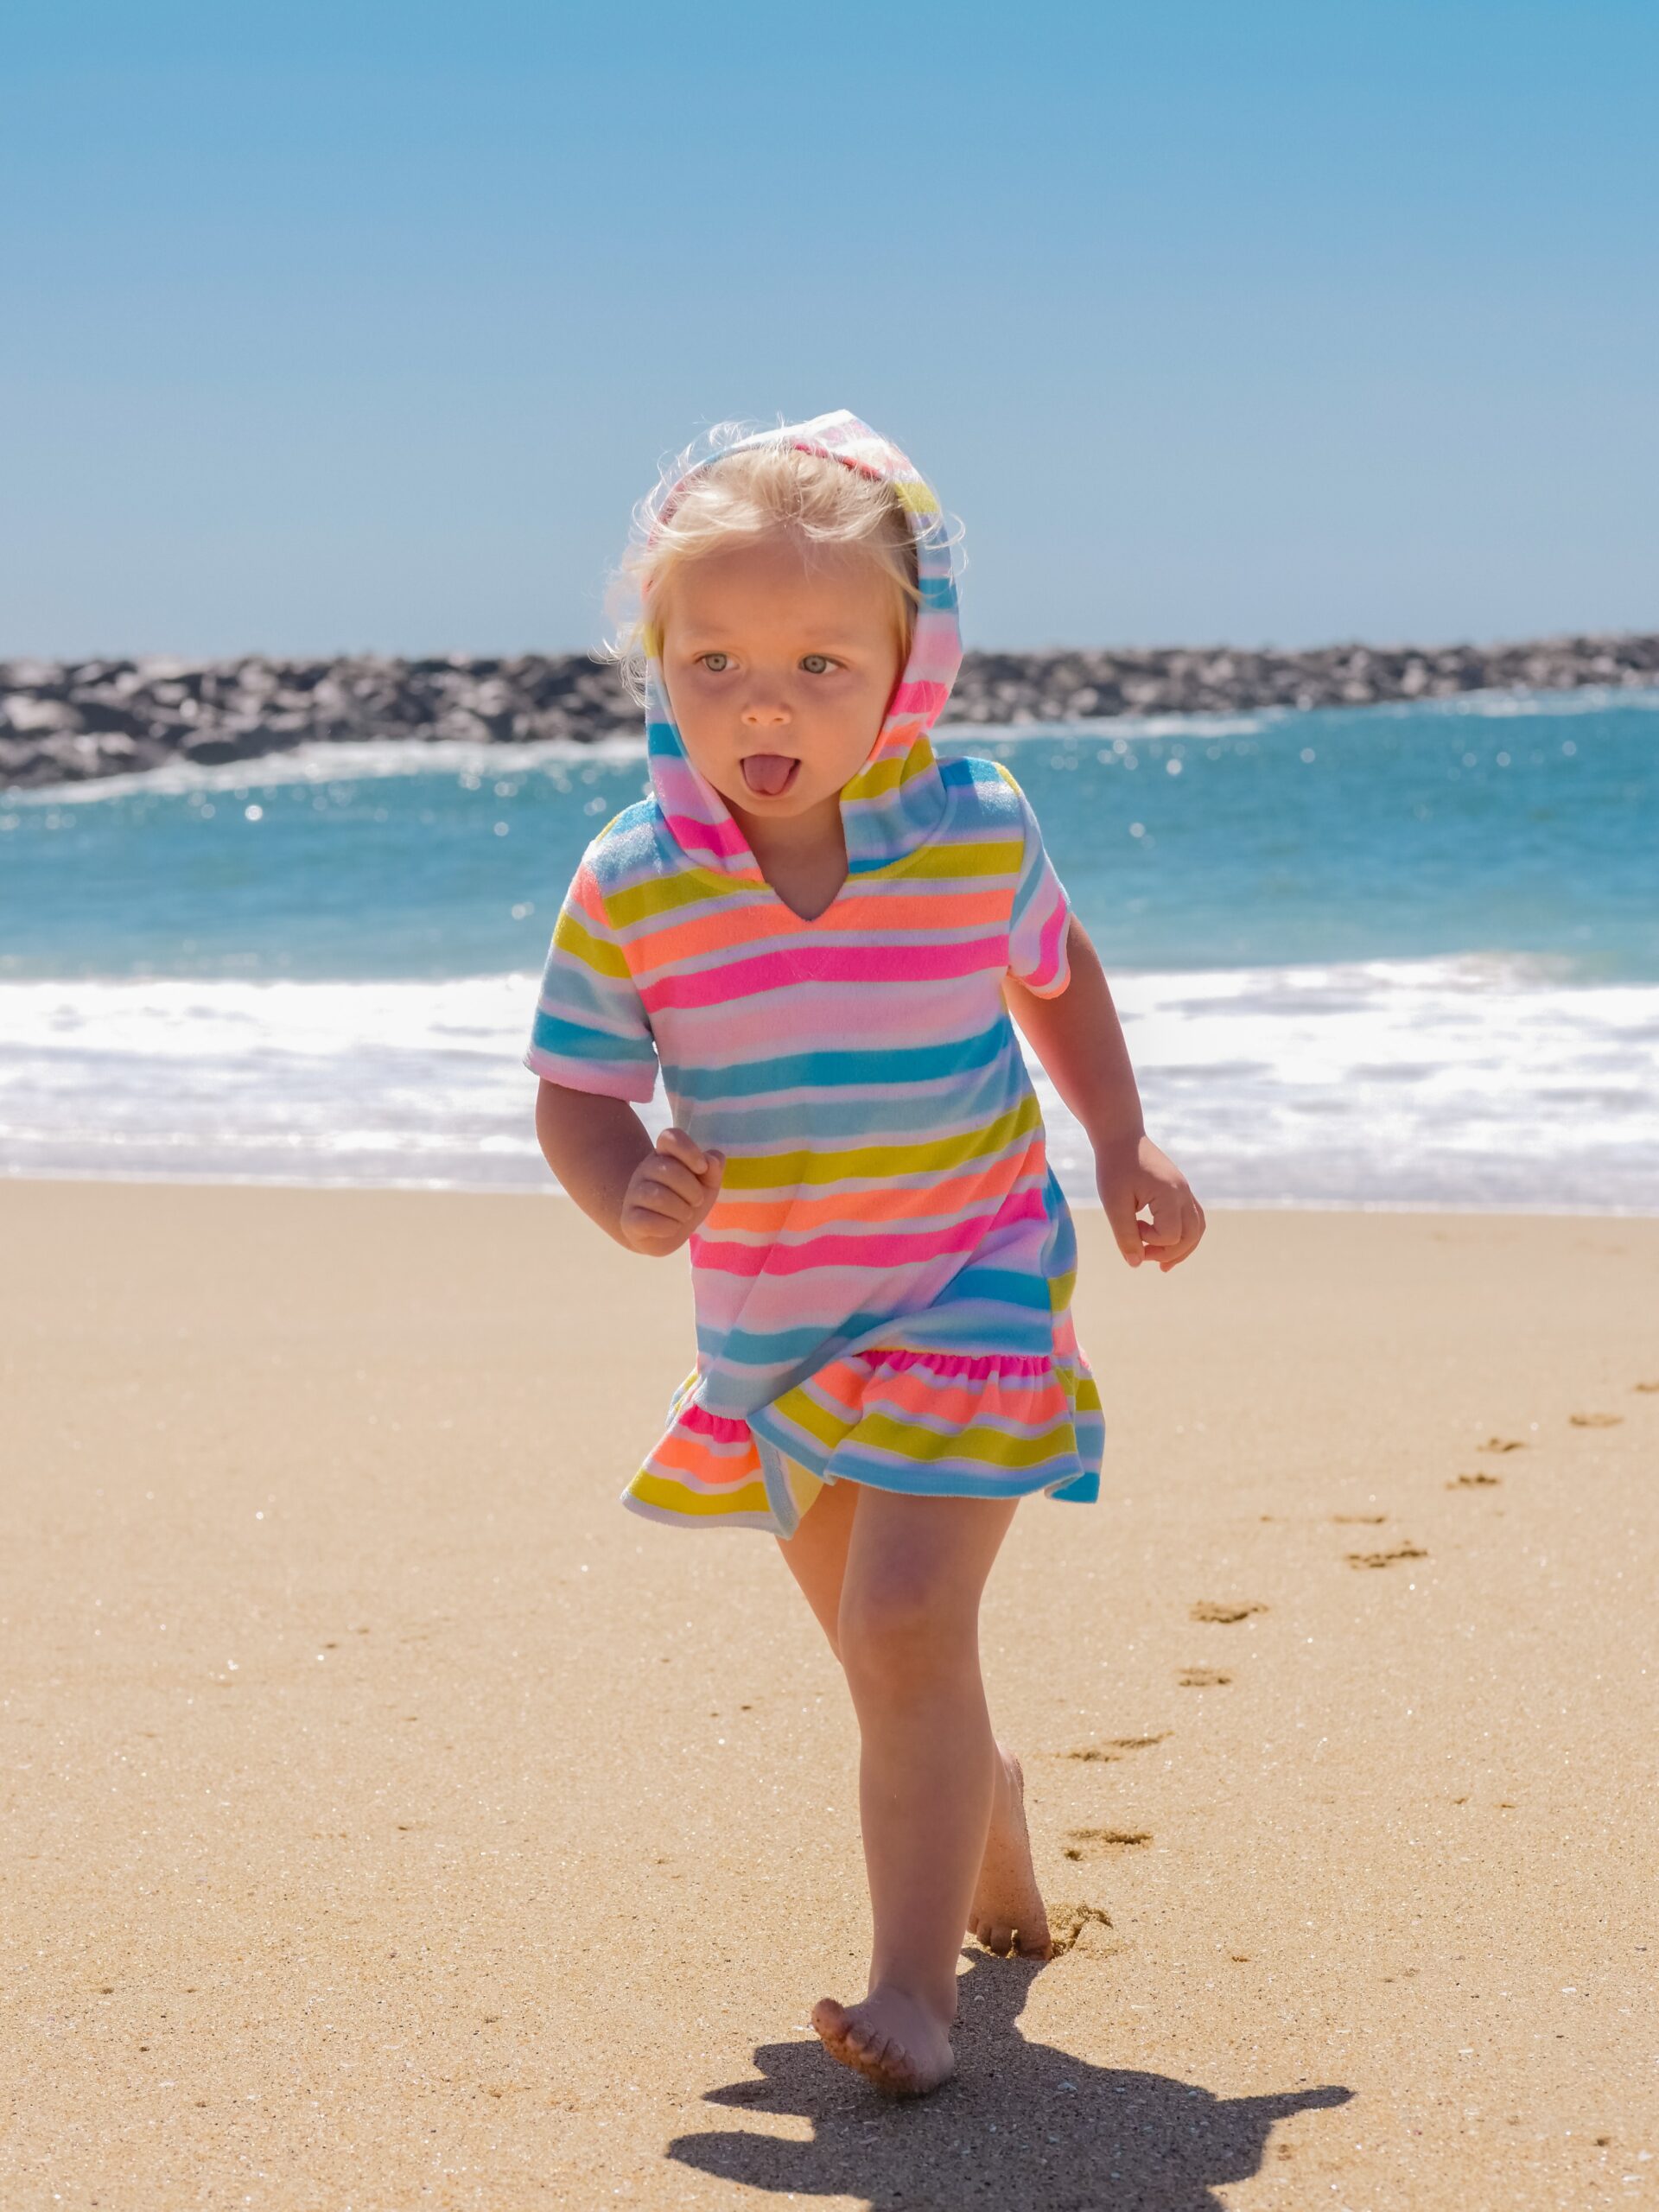 Child on beach on sunny day